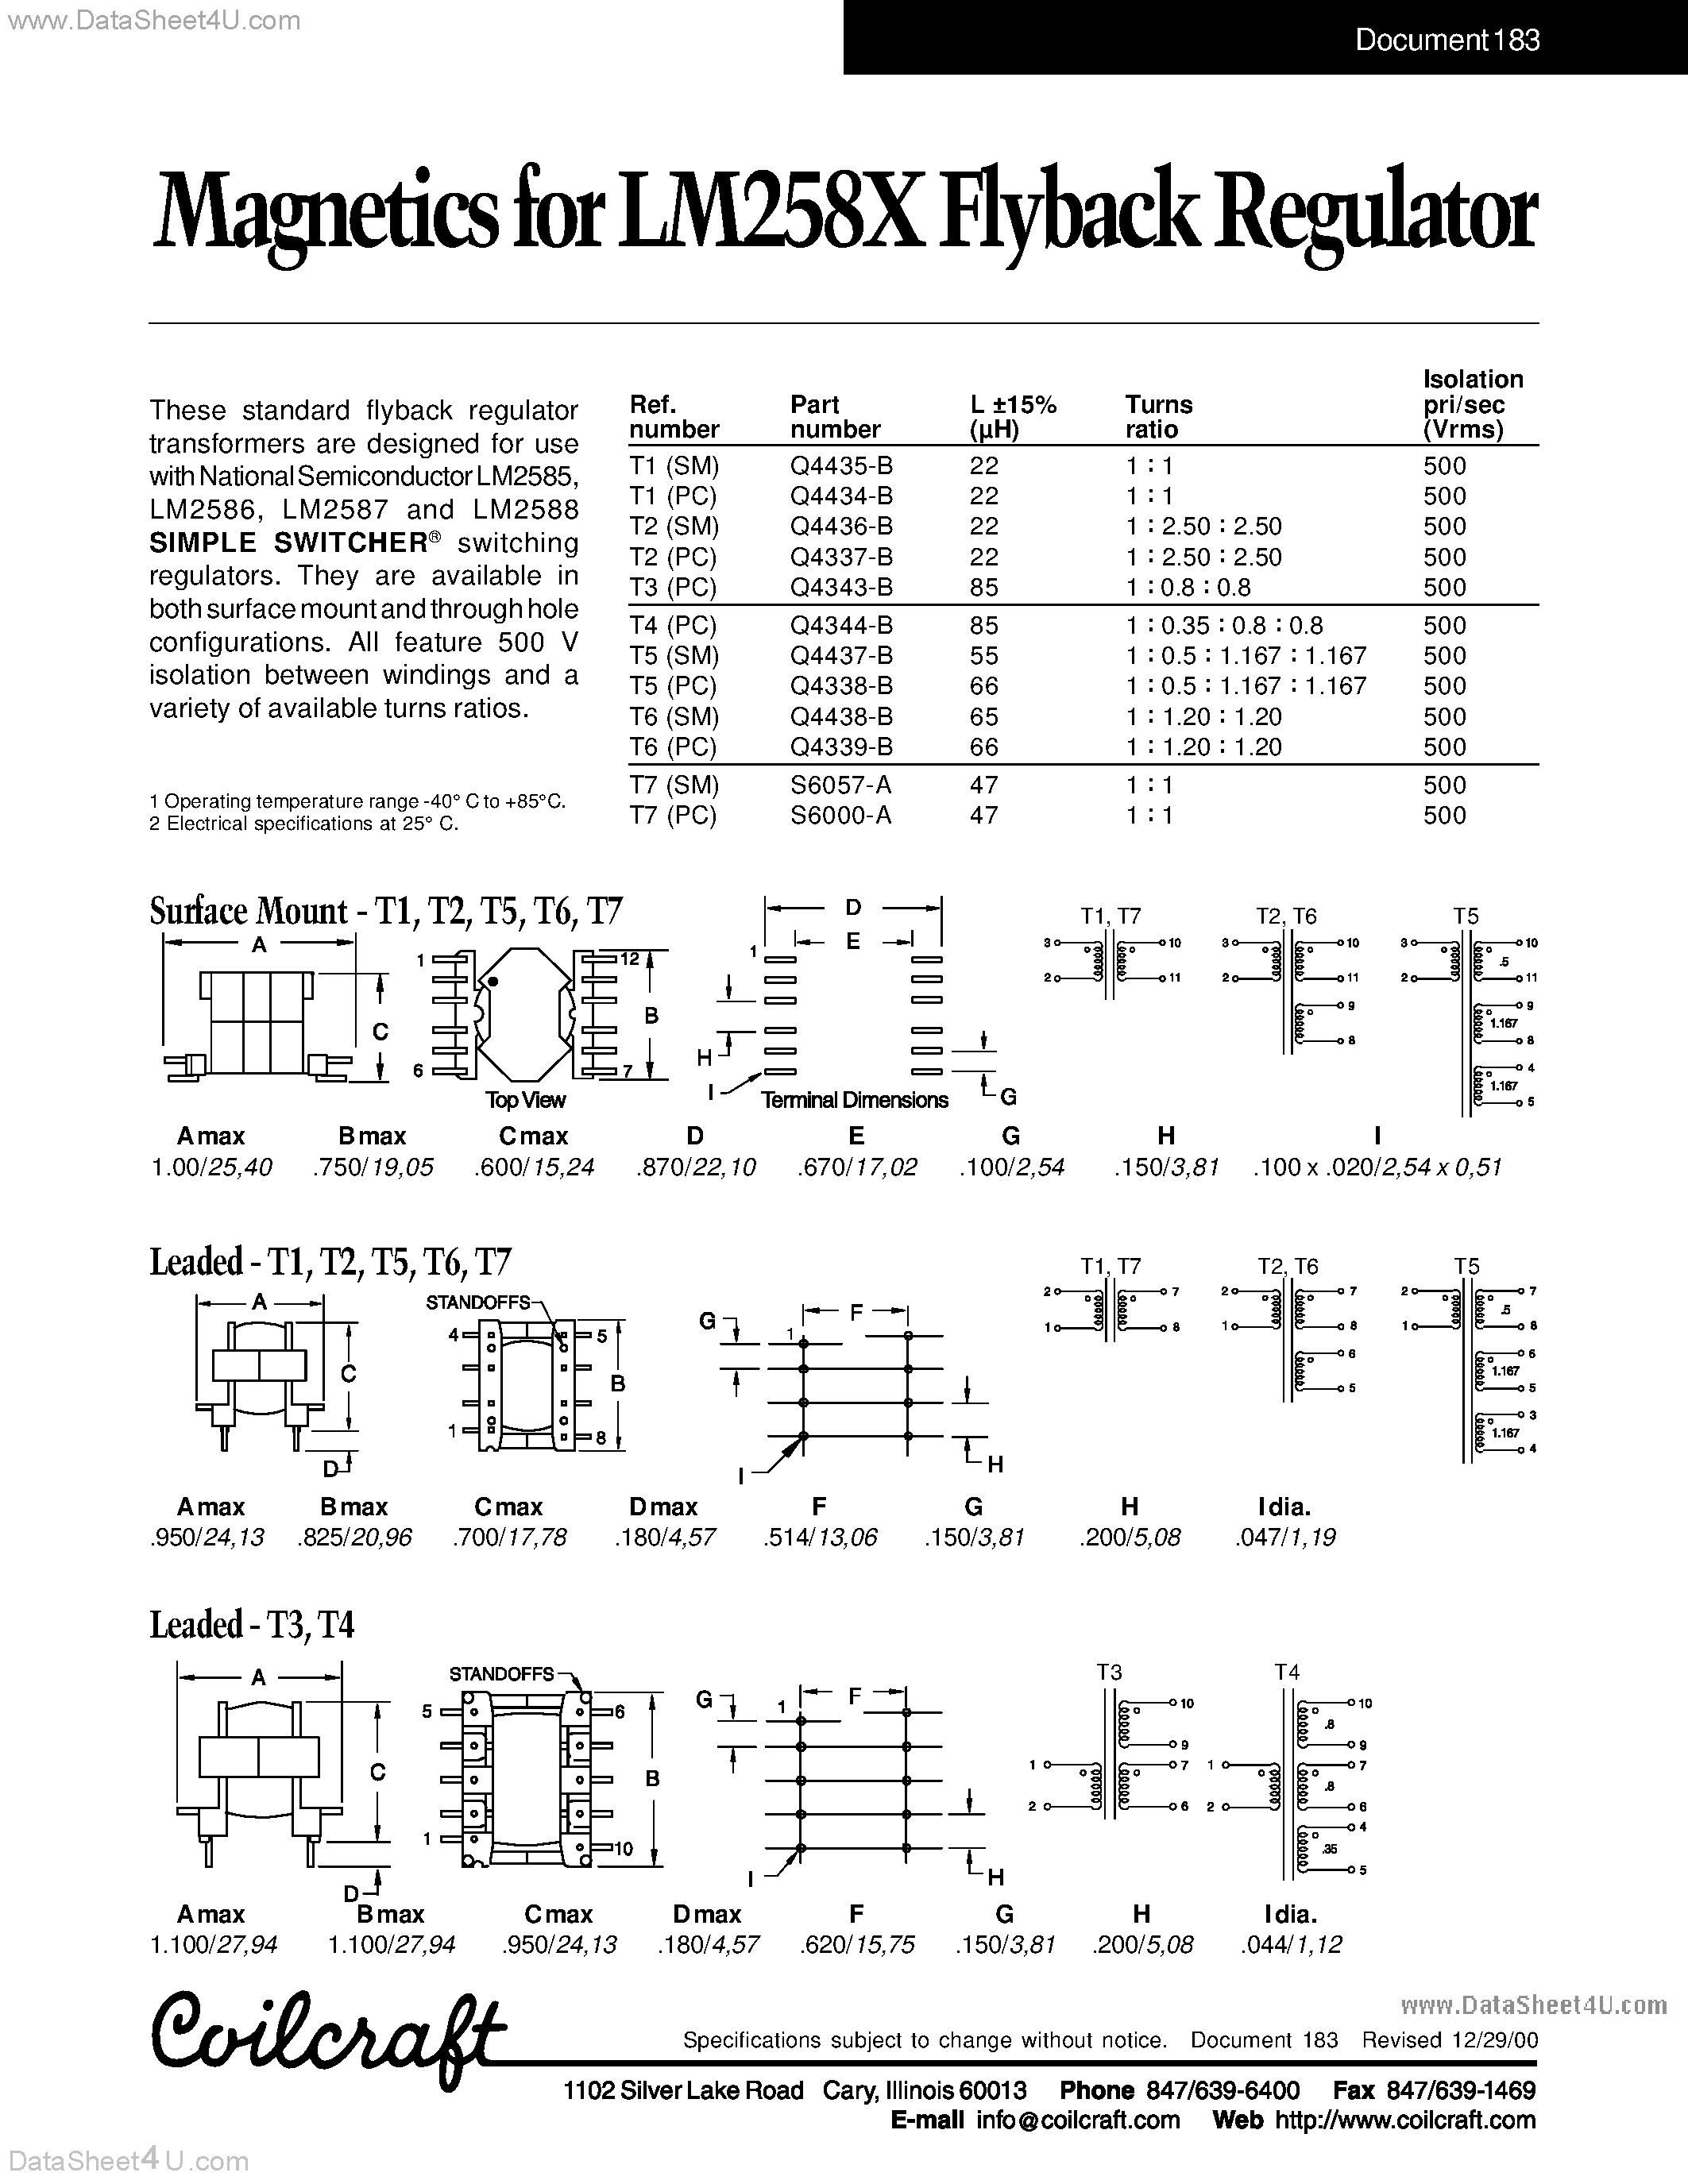 Datasheet Q4337-B - (Q43xx4-B) Transformer page 1